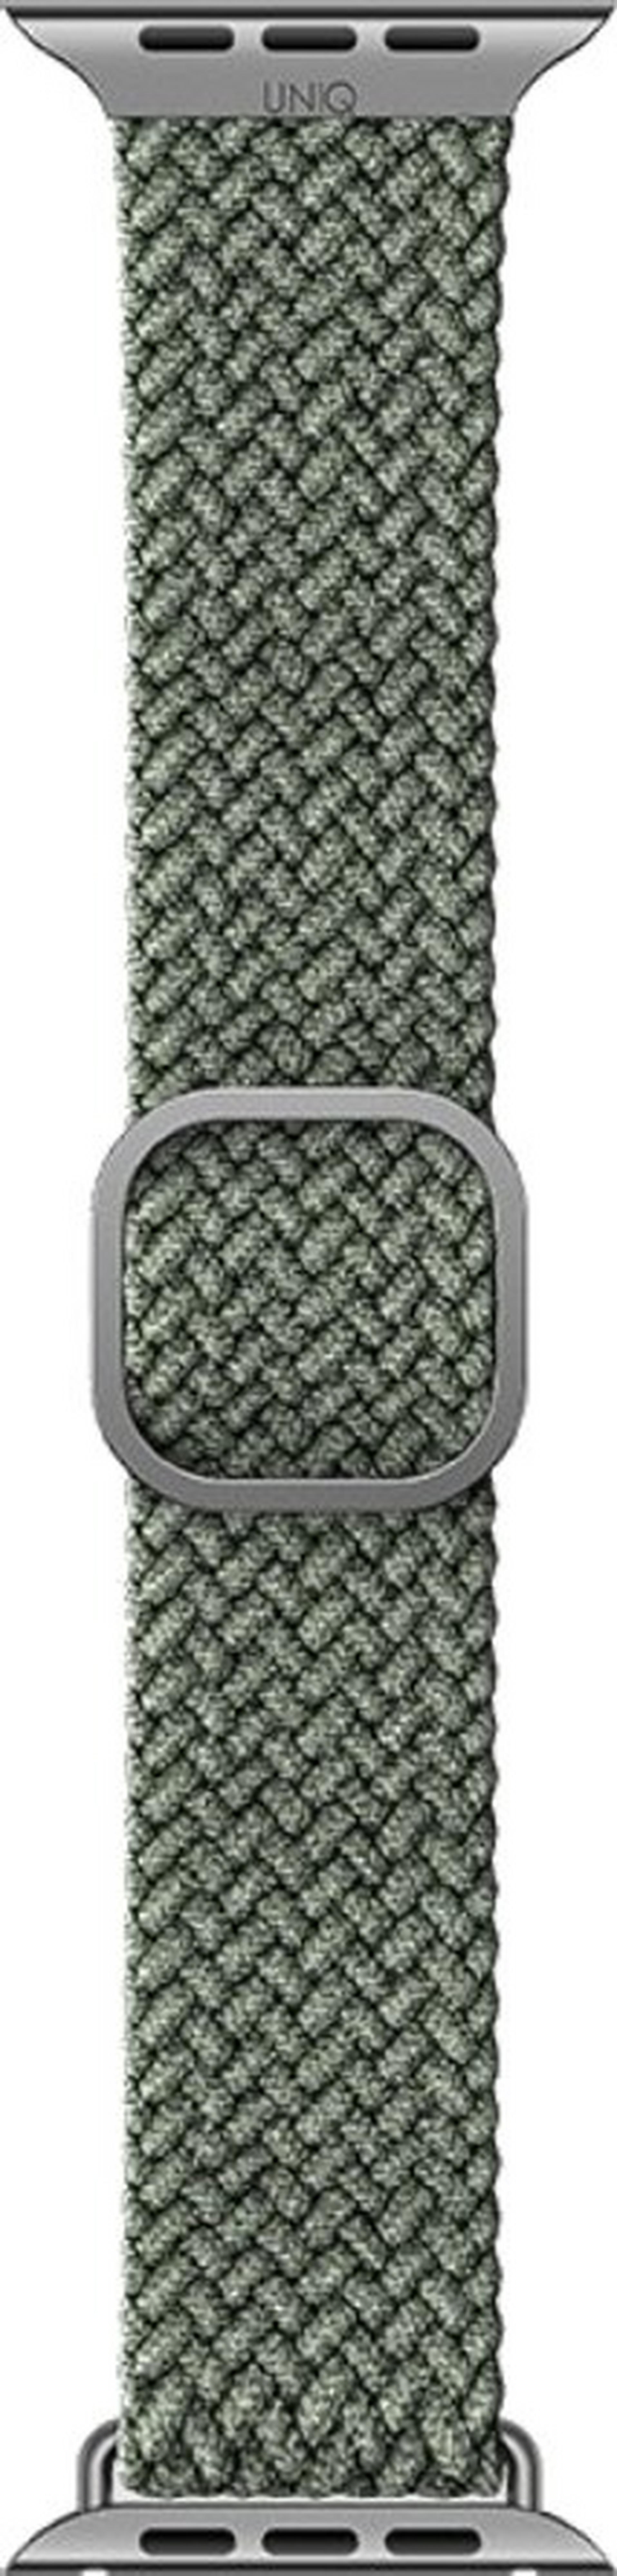 Uniq Aspen Apple Watch Strap 40/38mm - Green